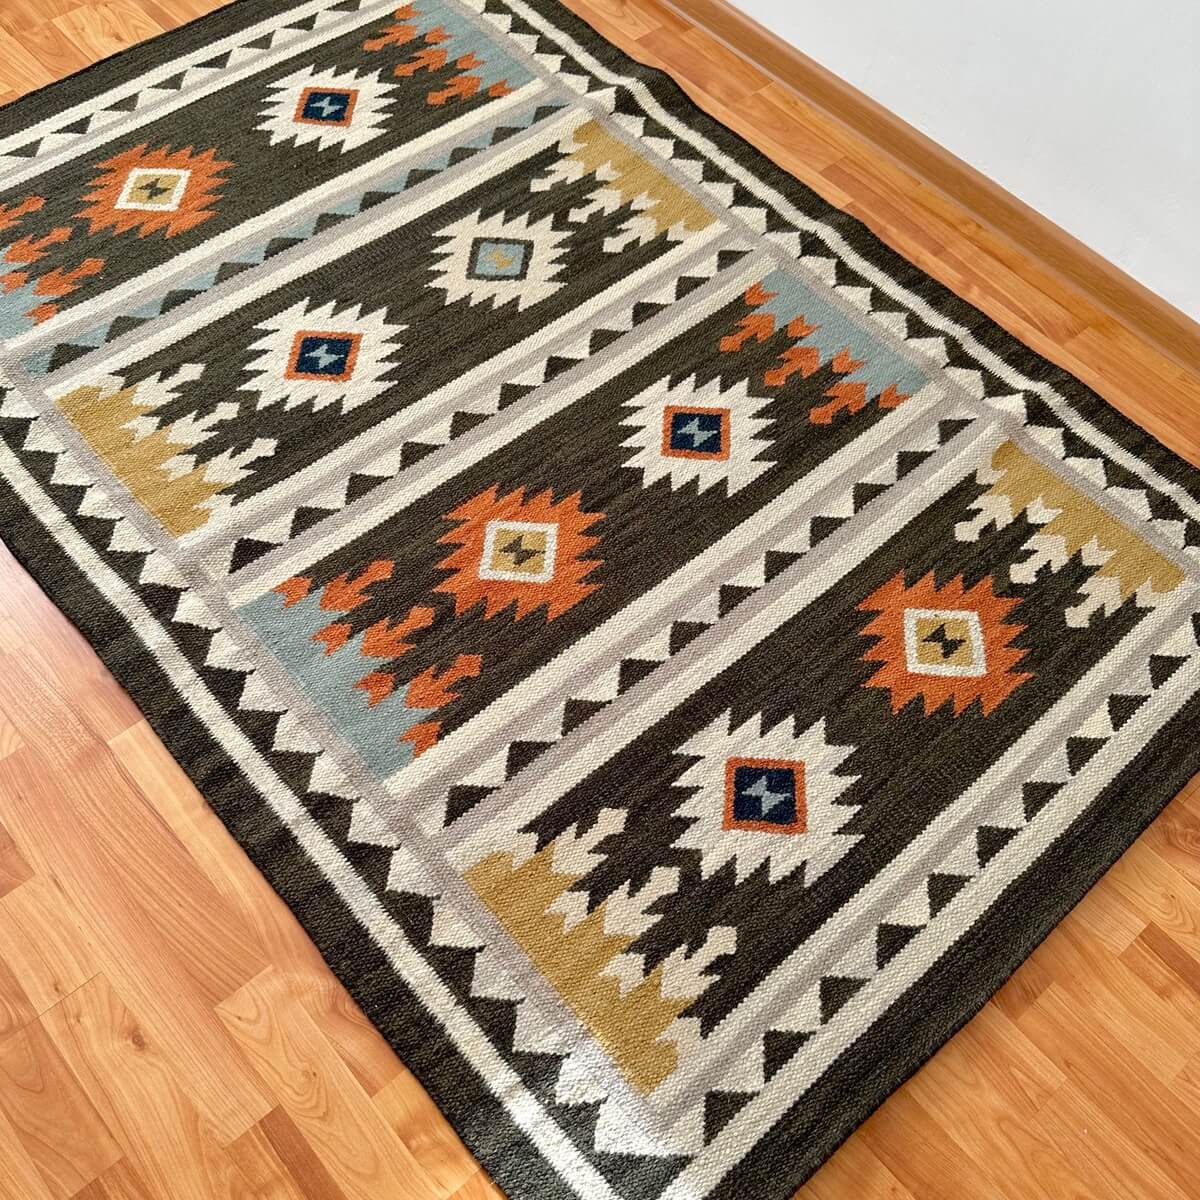 covor traditional kilim Sakala negru cu romburi tesut manual din lana, pe podea